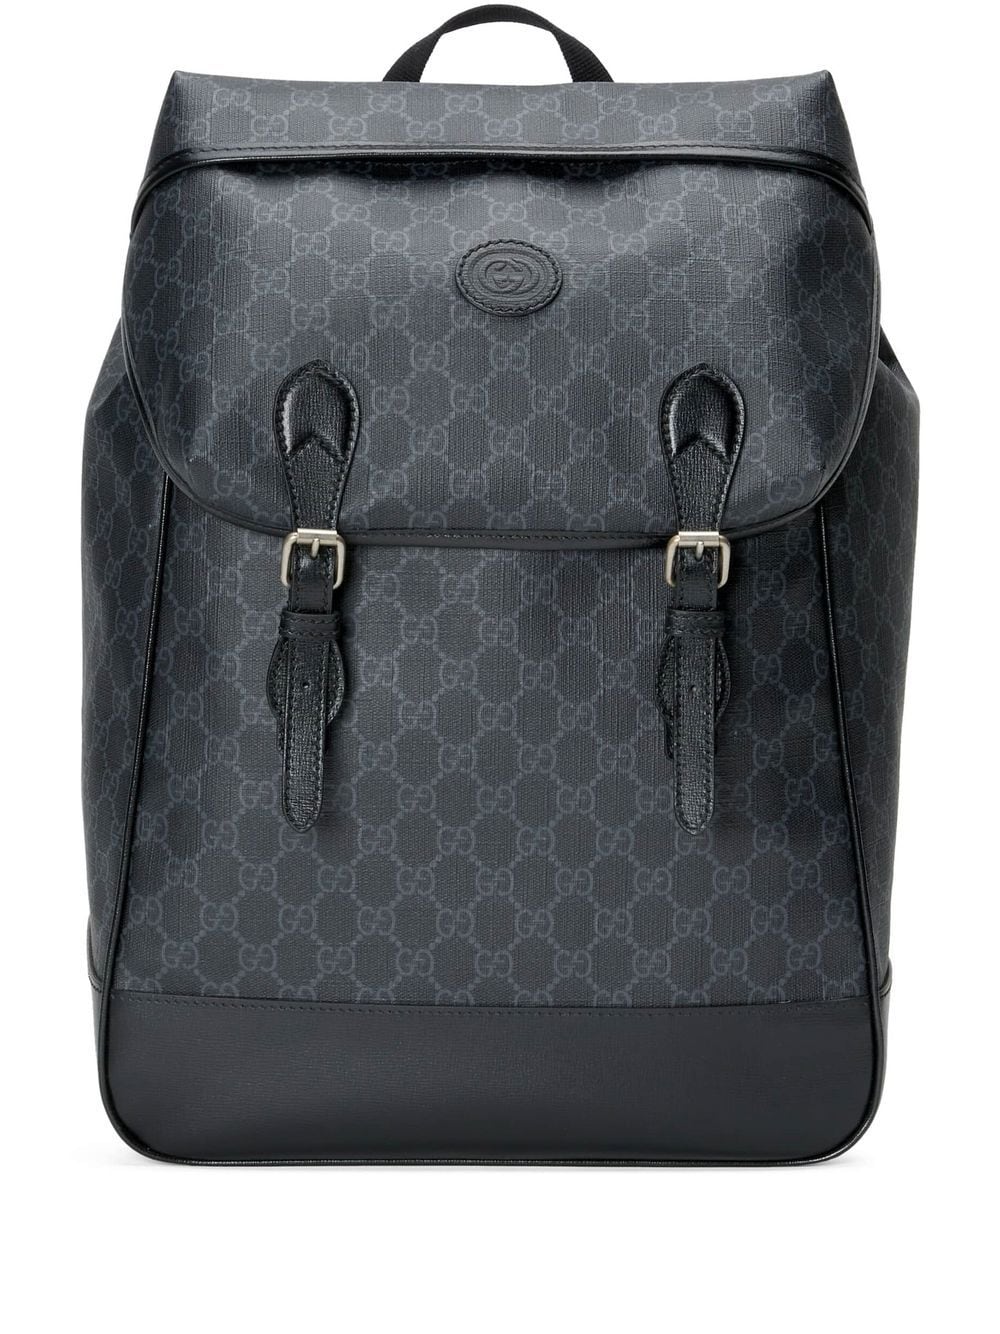 Gucci Gg Supreme Canvas Backpack Blk/blk/blk/blk/blk | ModeSens